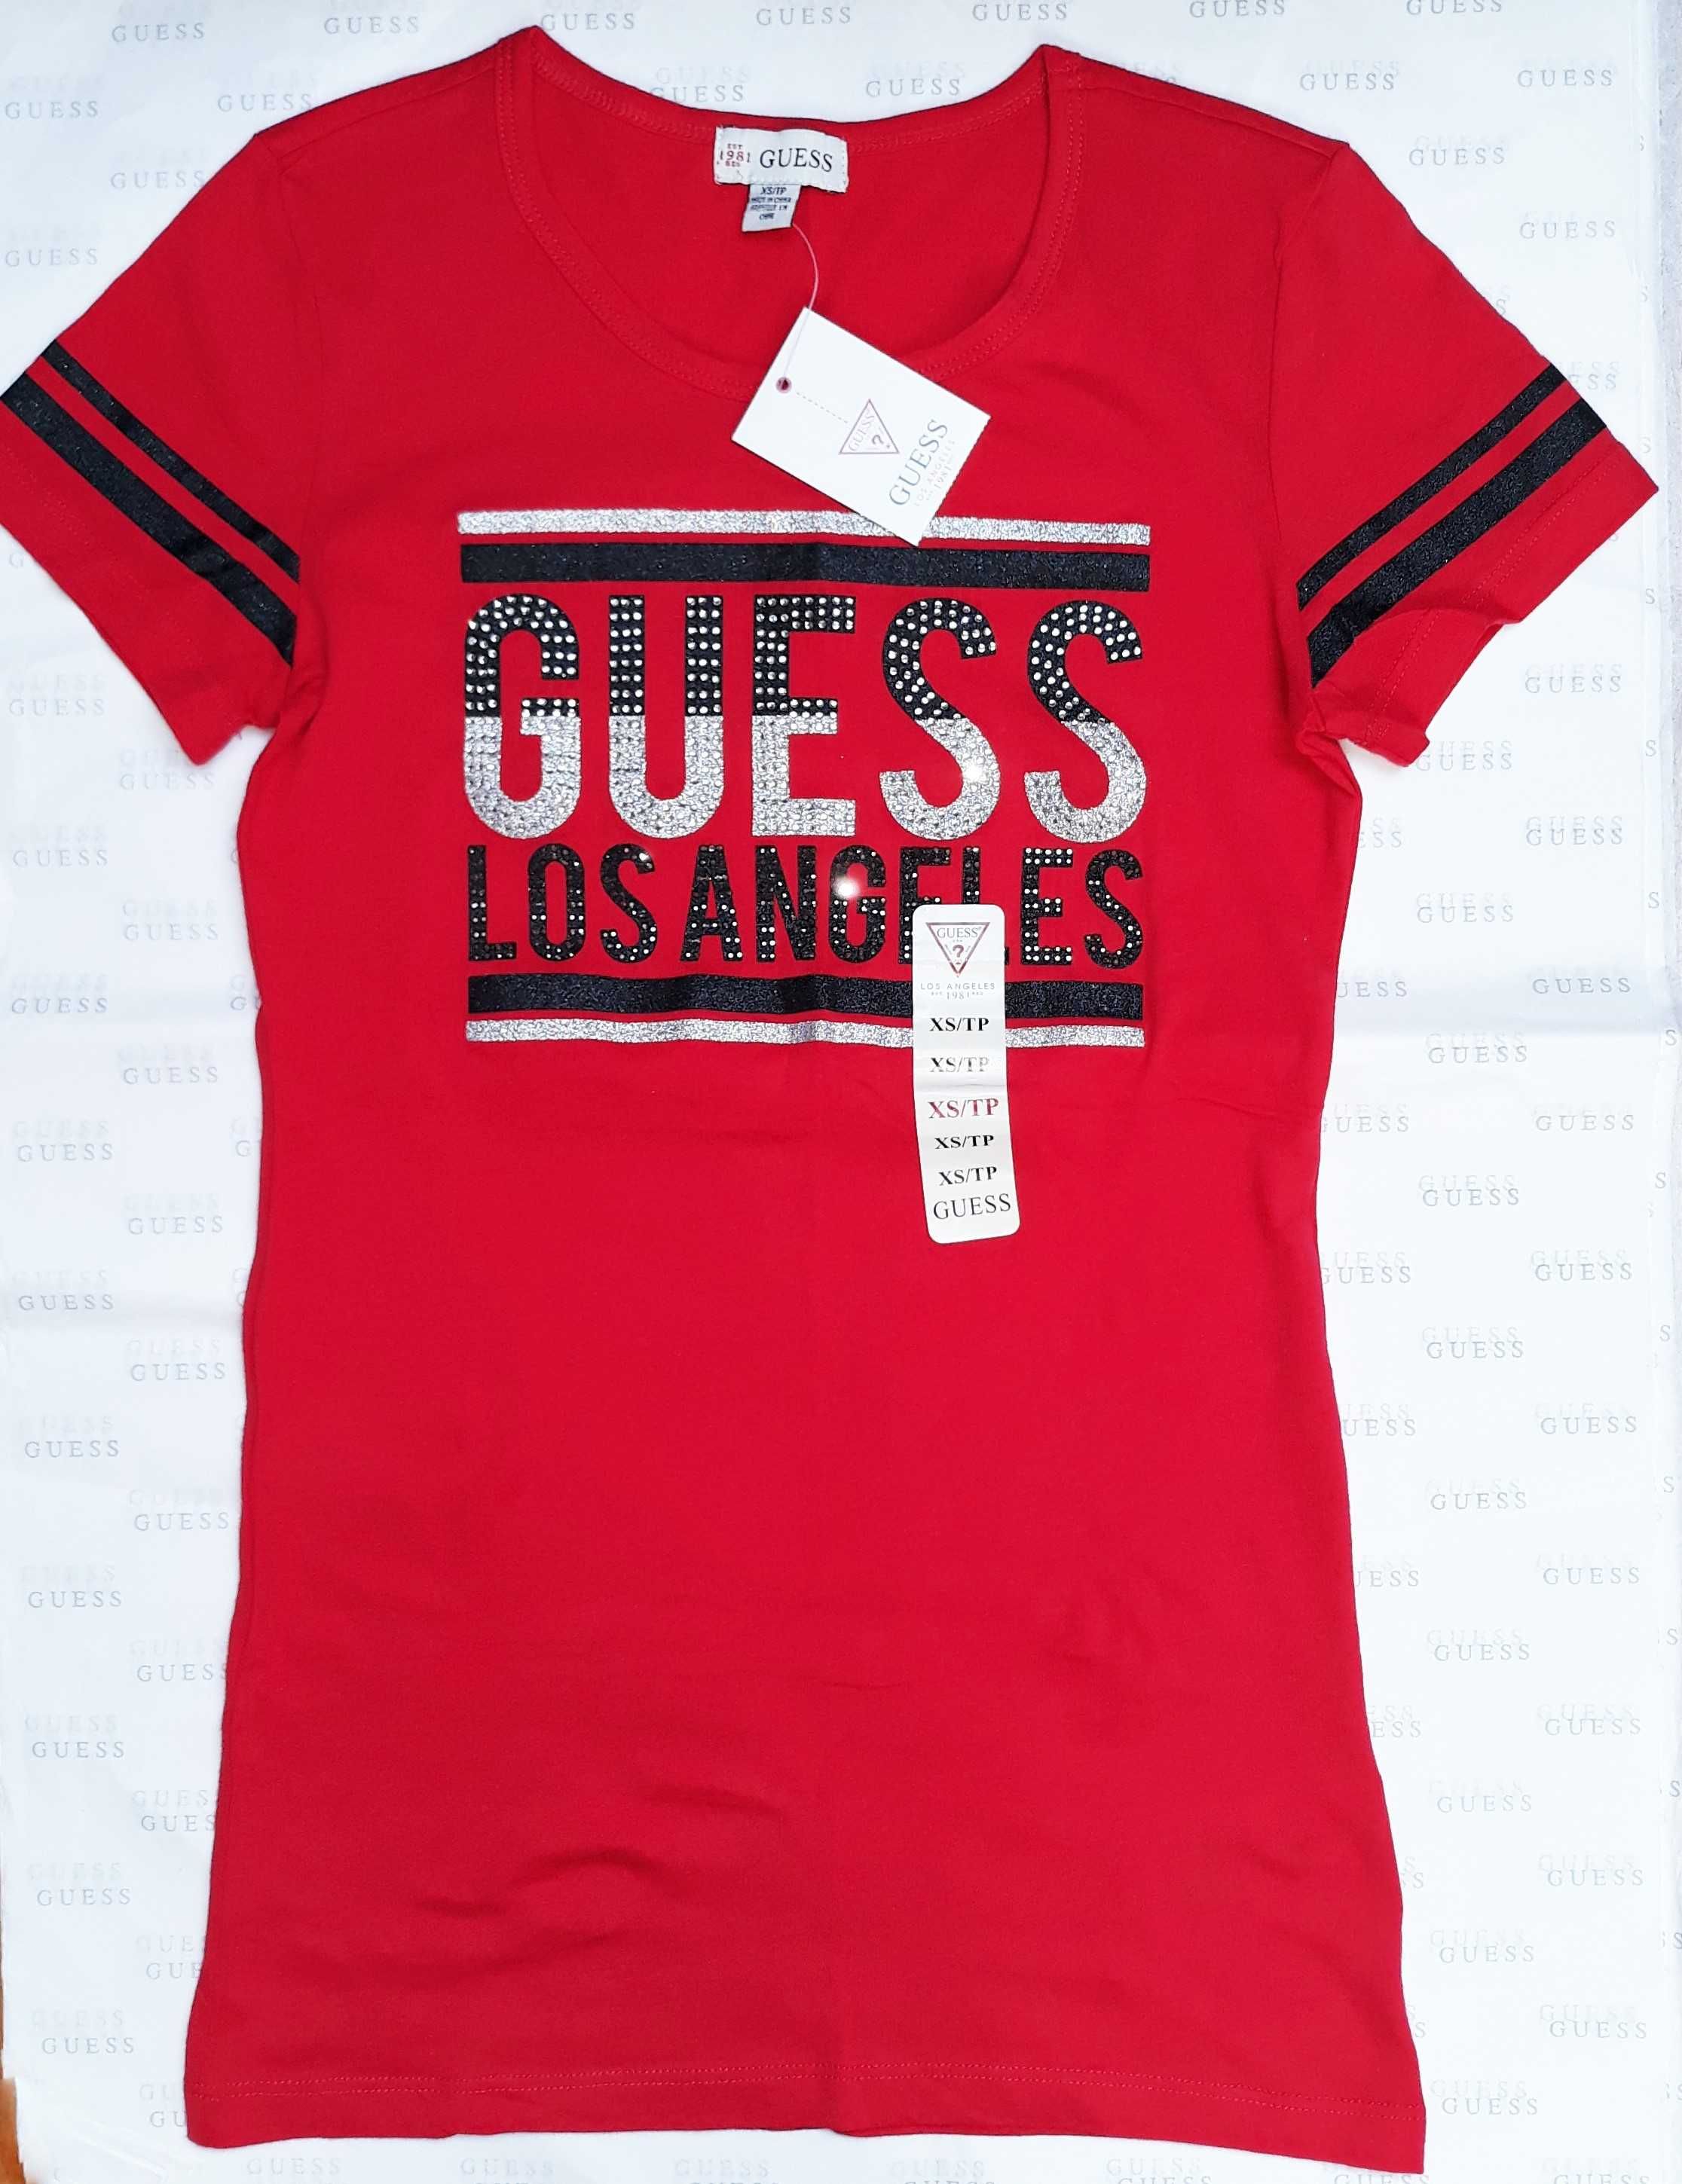 GUESS Oryginalna! Koszulka T-Shirt Bluzka Czerwona Brokat Metallic